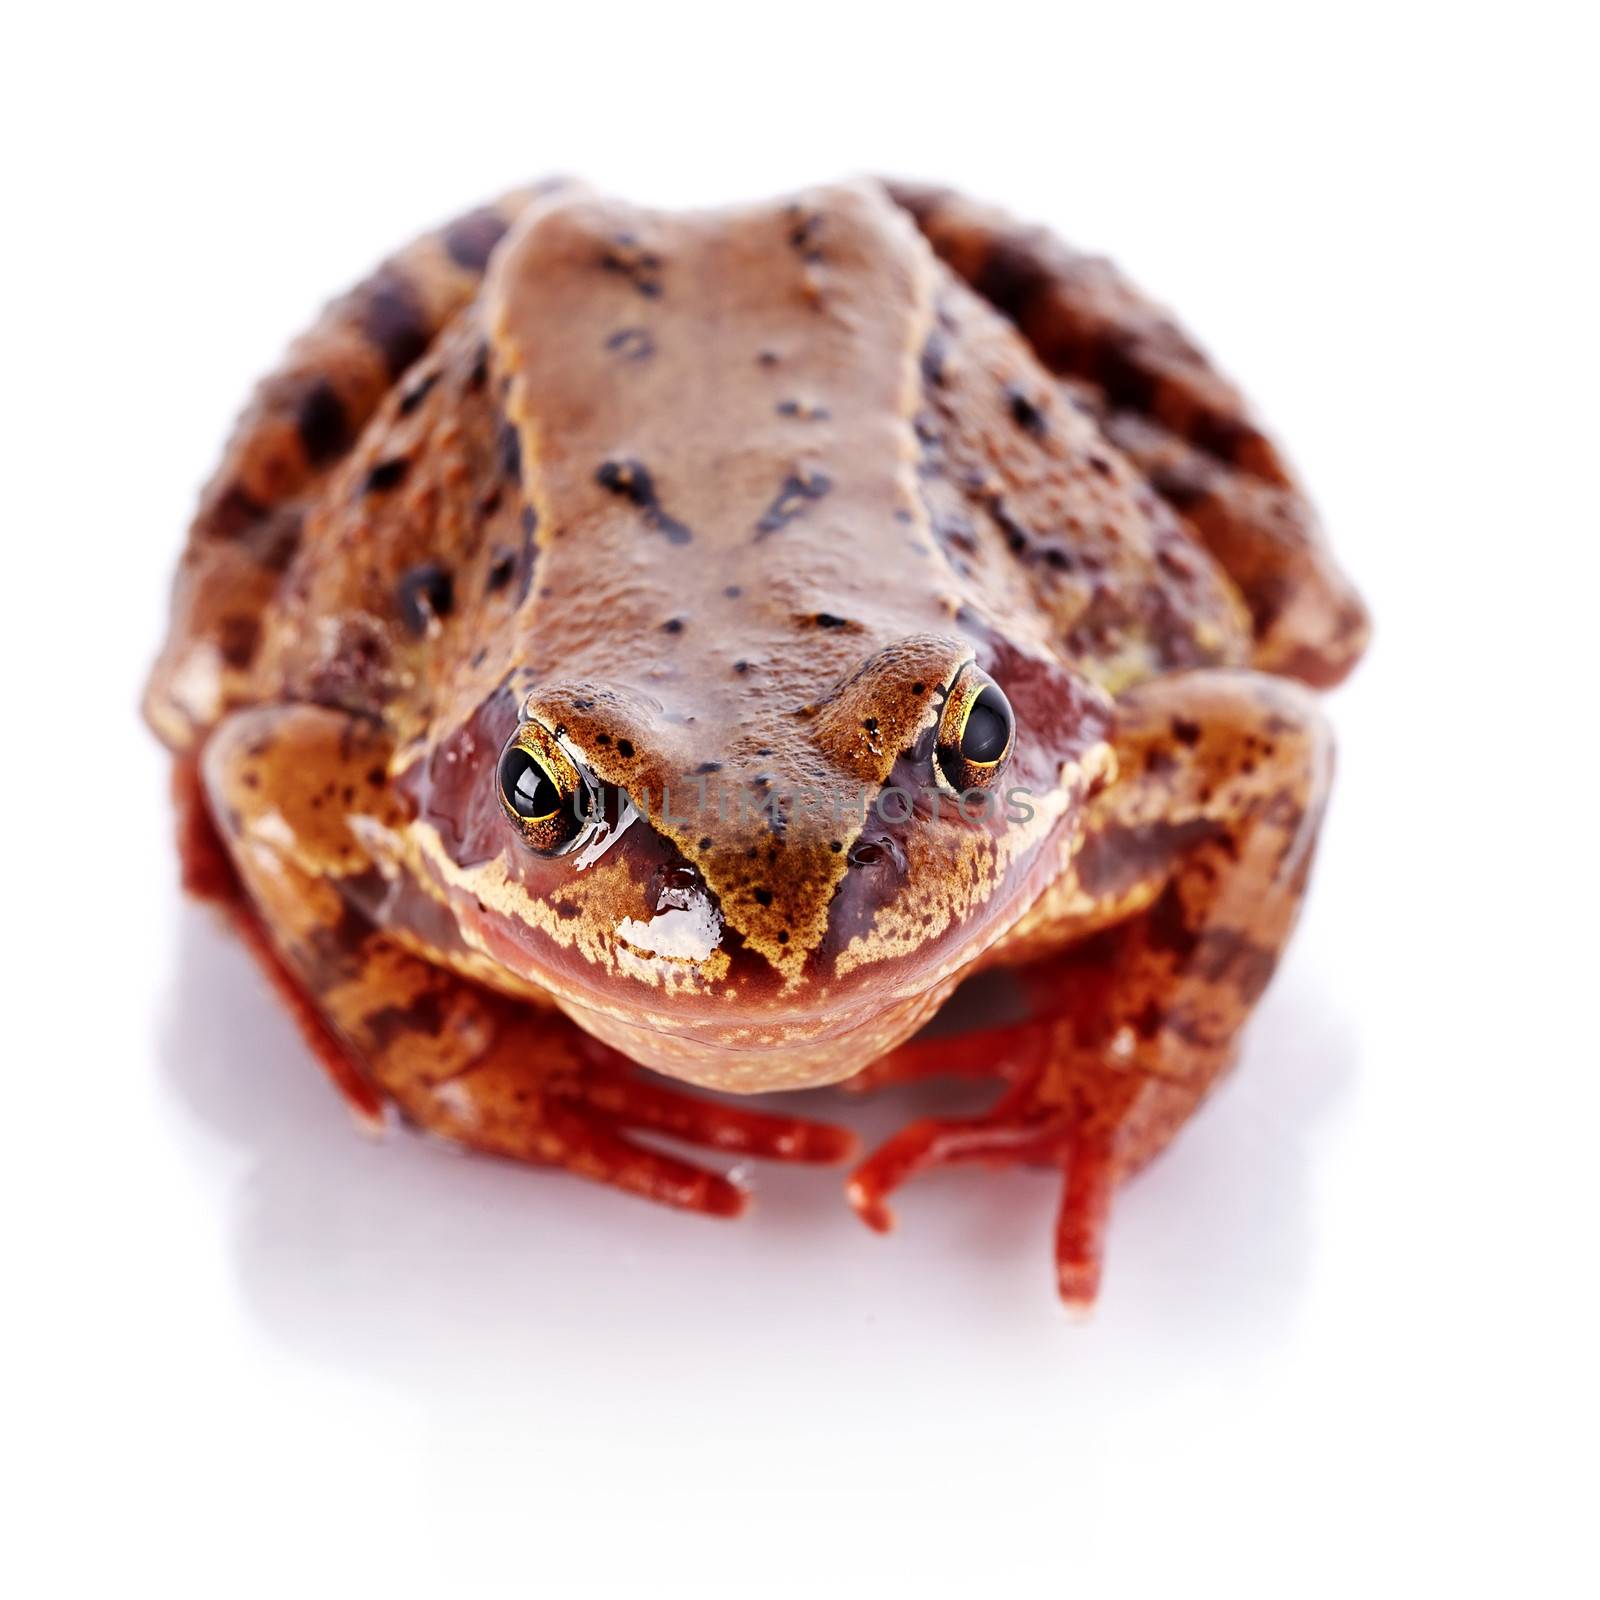 European common frog by Azaliya